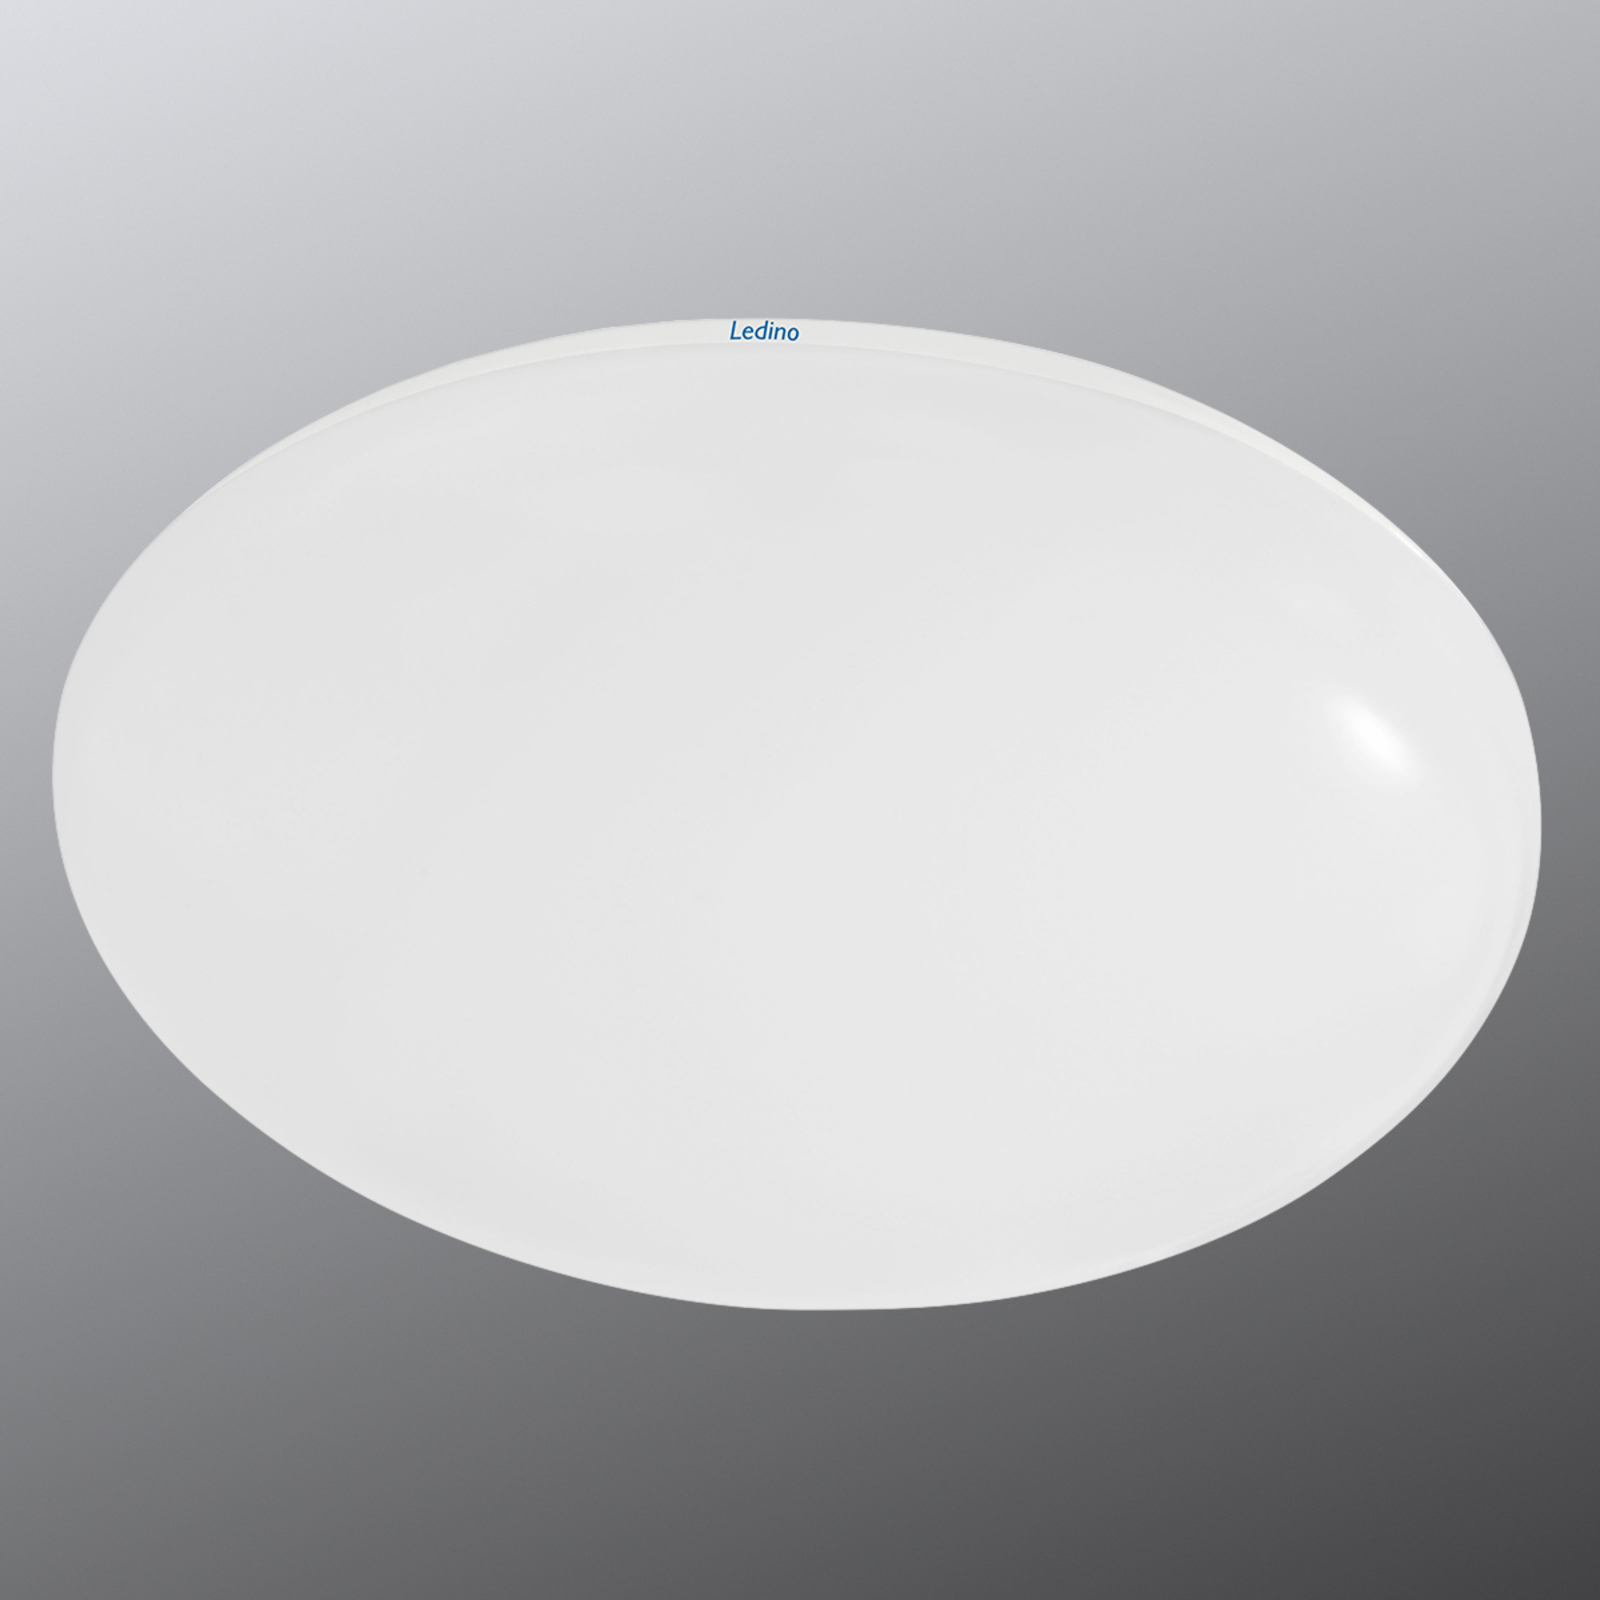 Powerful LED ceiling lamp Altona with sensor